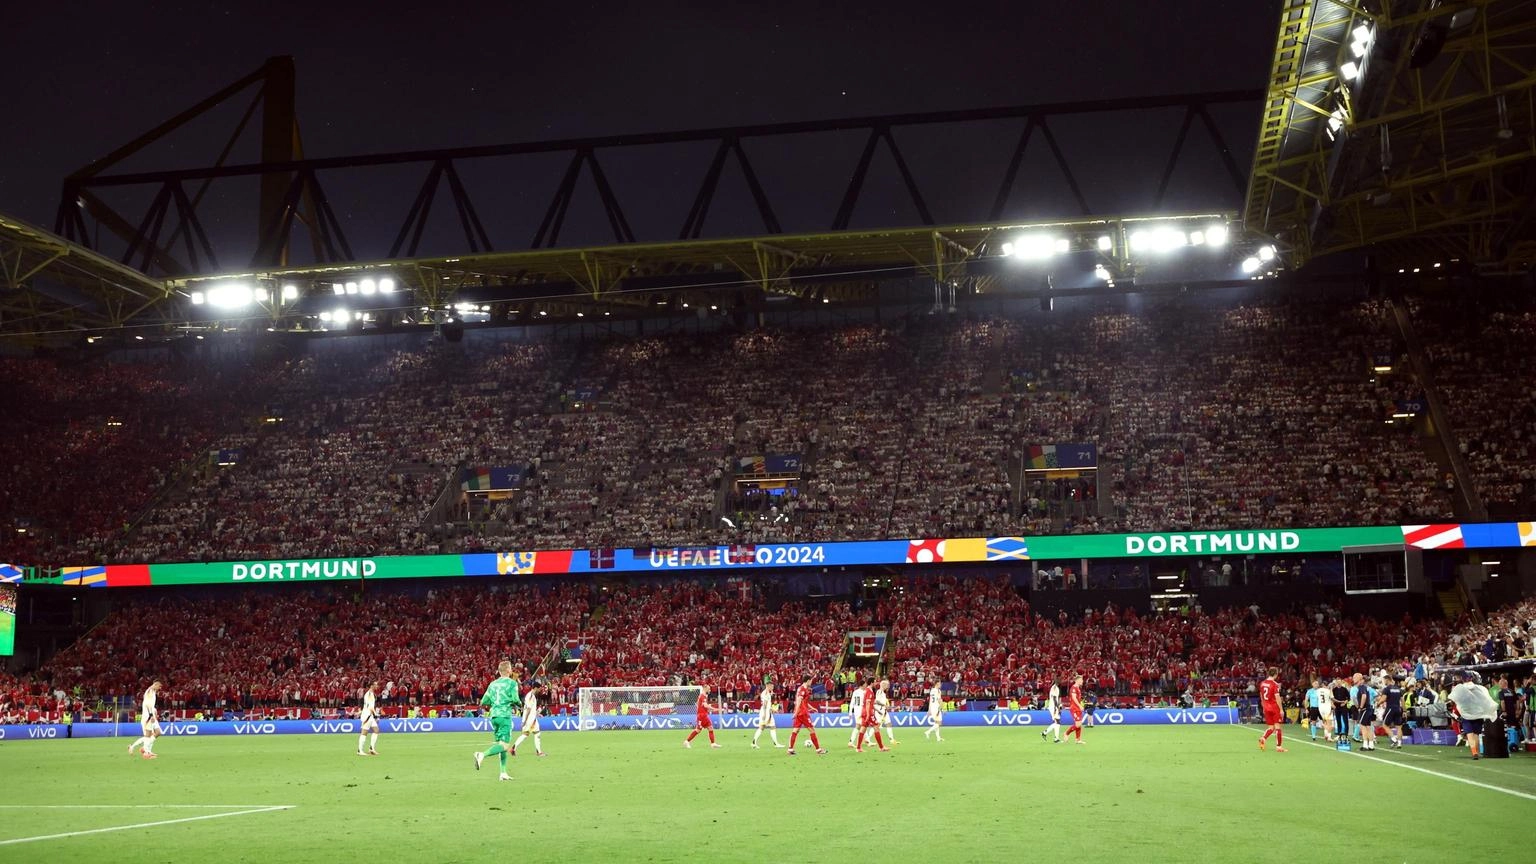 Euro 24: temporale su Dortmund, sospesa Germania-Danimarca